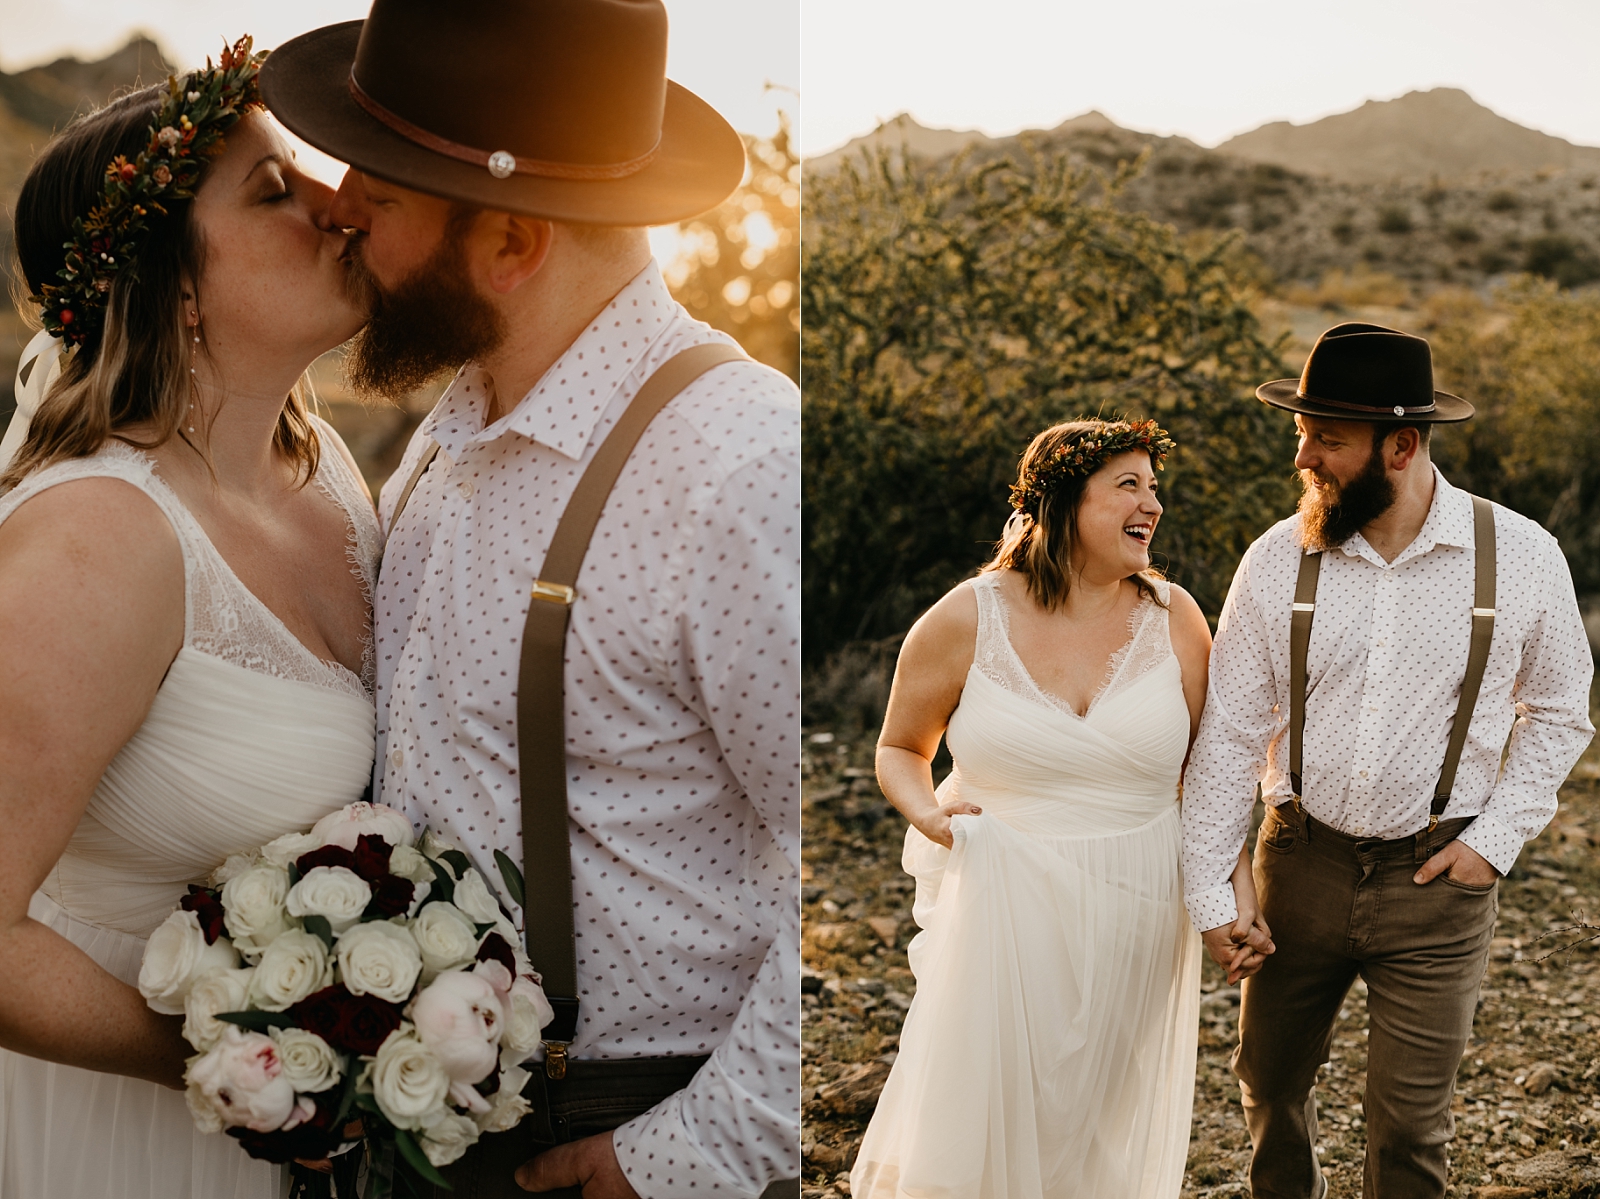 Sunset bride and groom Piestewa Peak Dreamy Draw desert elopement photos Phoenix AZ Photographer Samantha Patri Photography